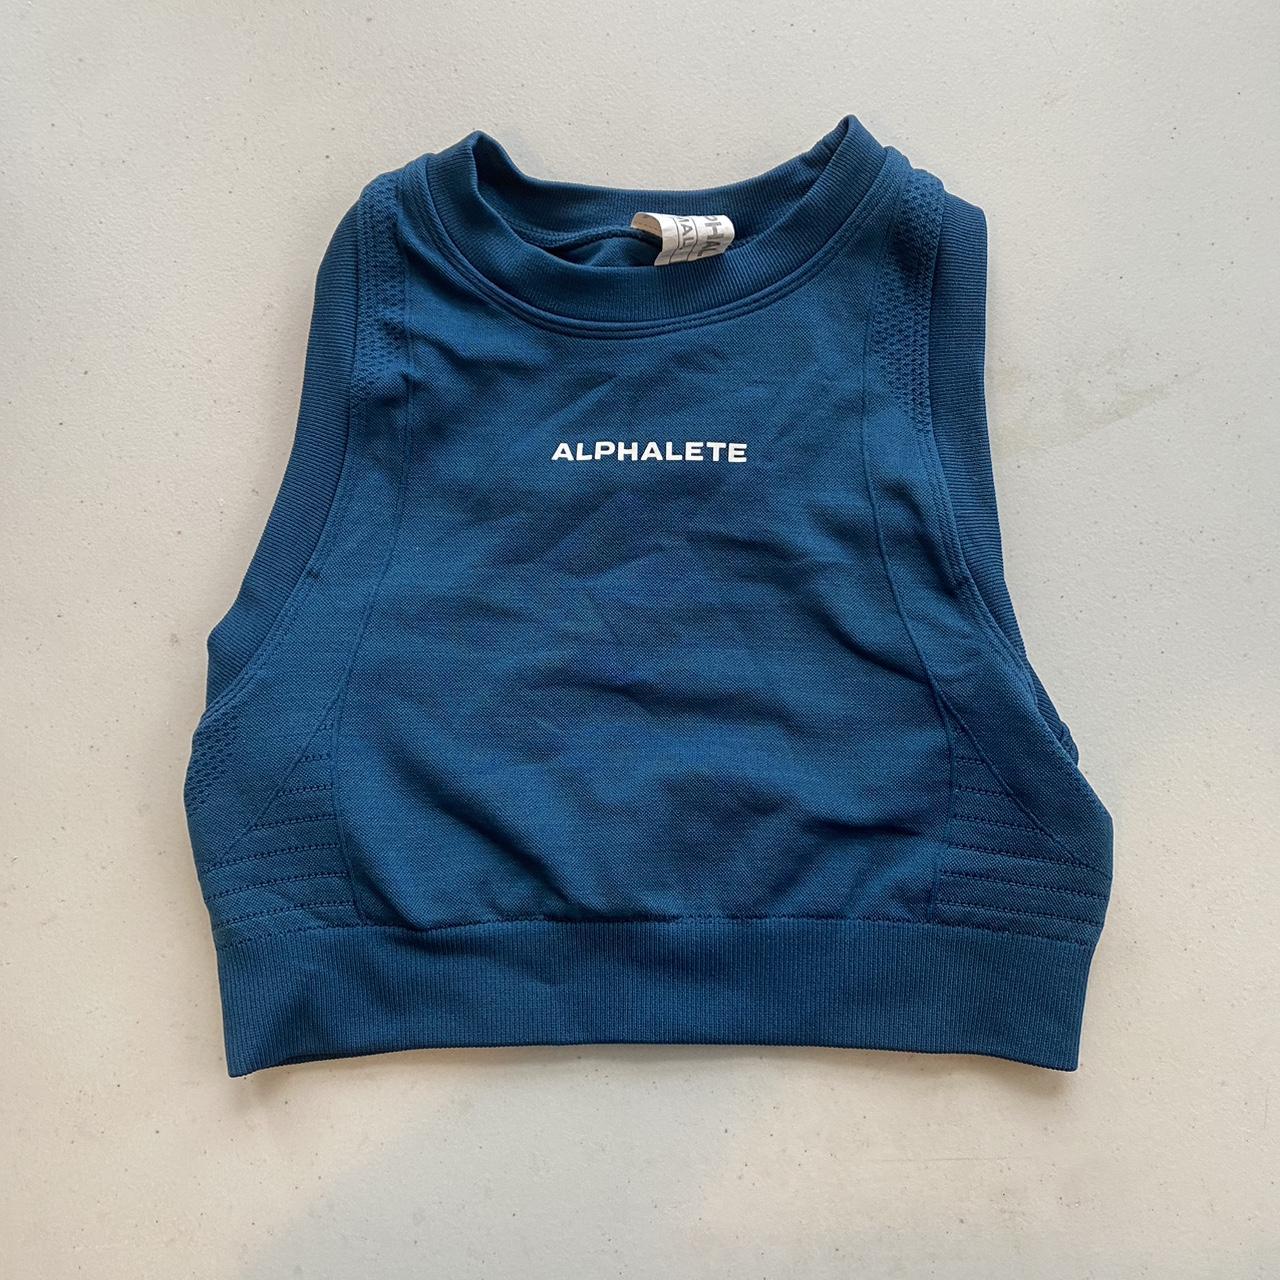 alphalete ozone sports bra in atlantic blue, no... - Depop